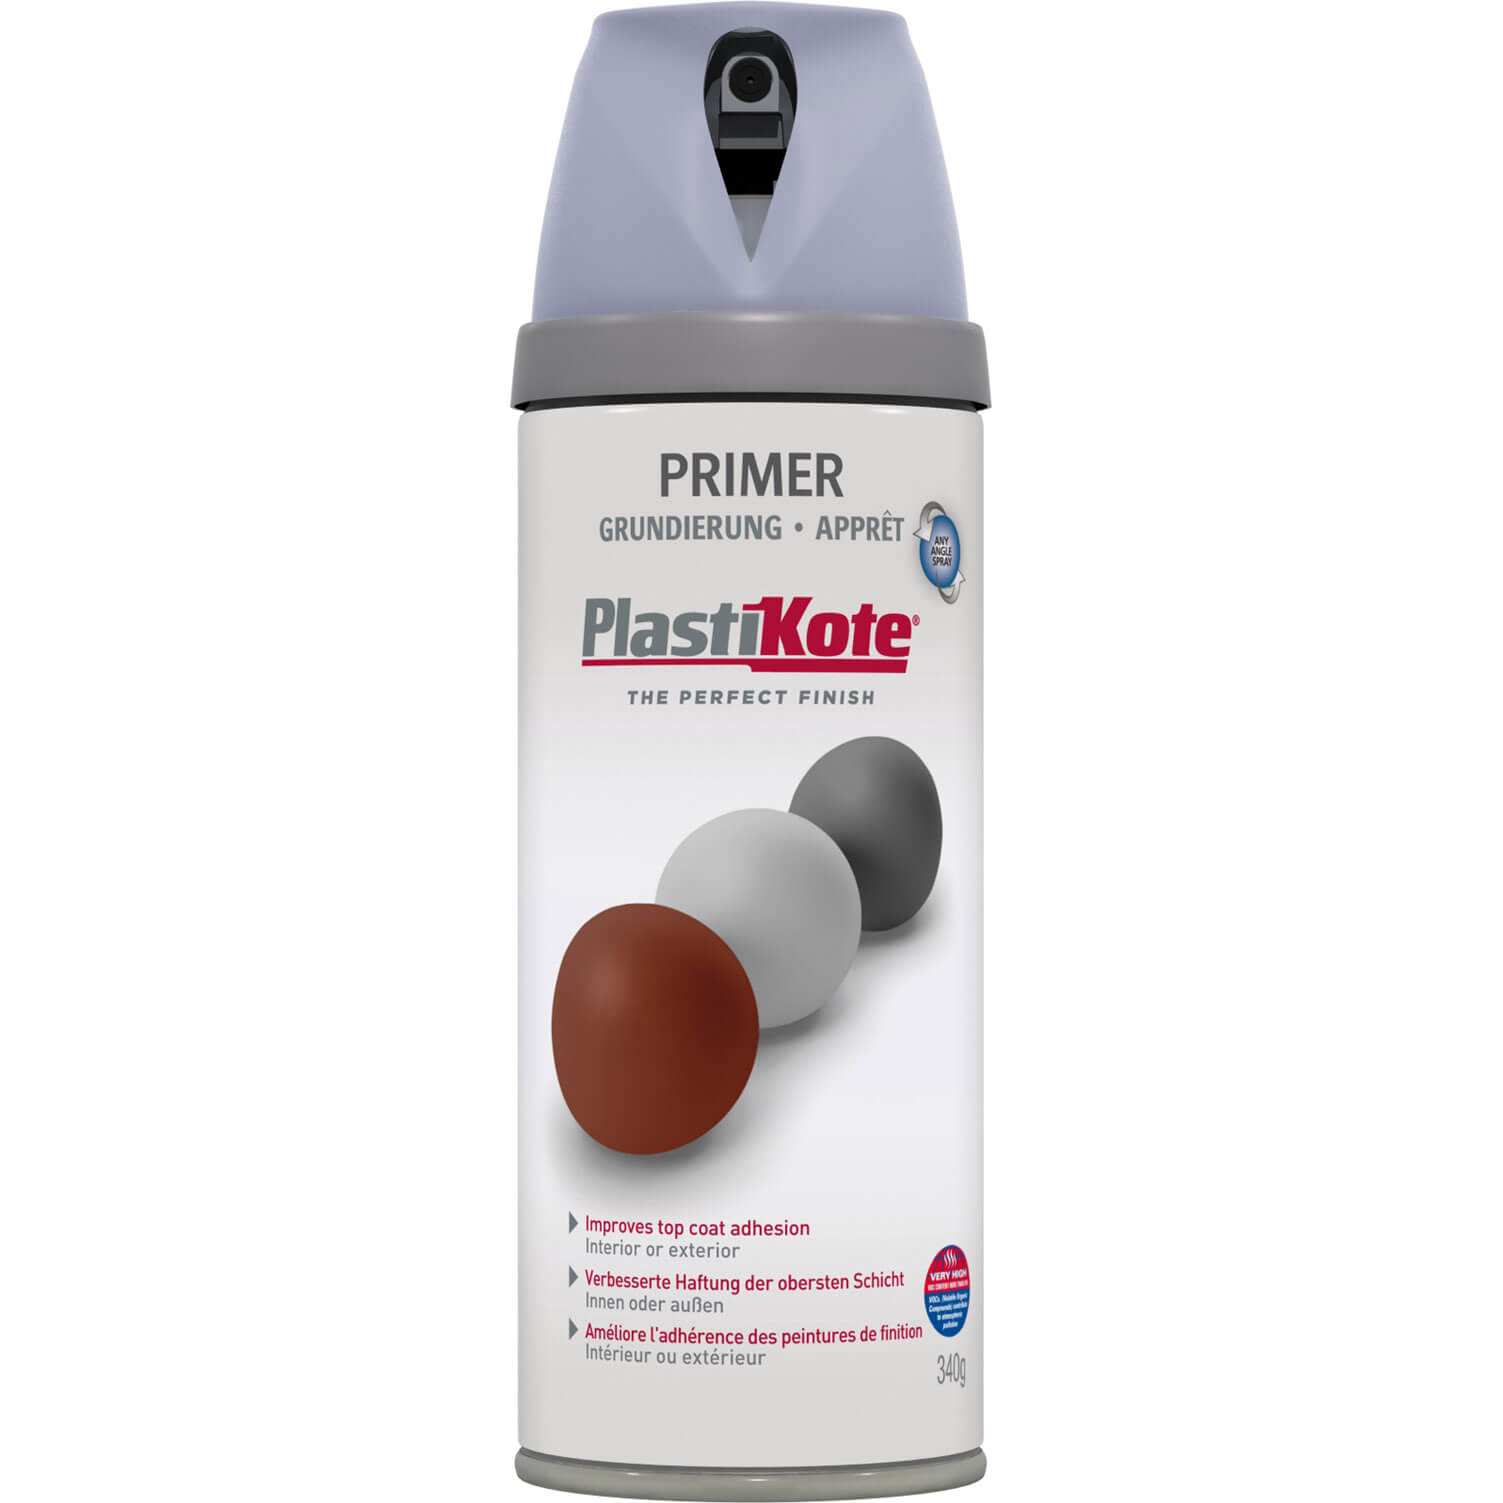 Image of Plastikote Primer Aerosol Spray Paint Grey 400ml